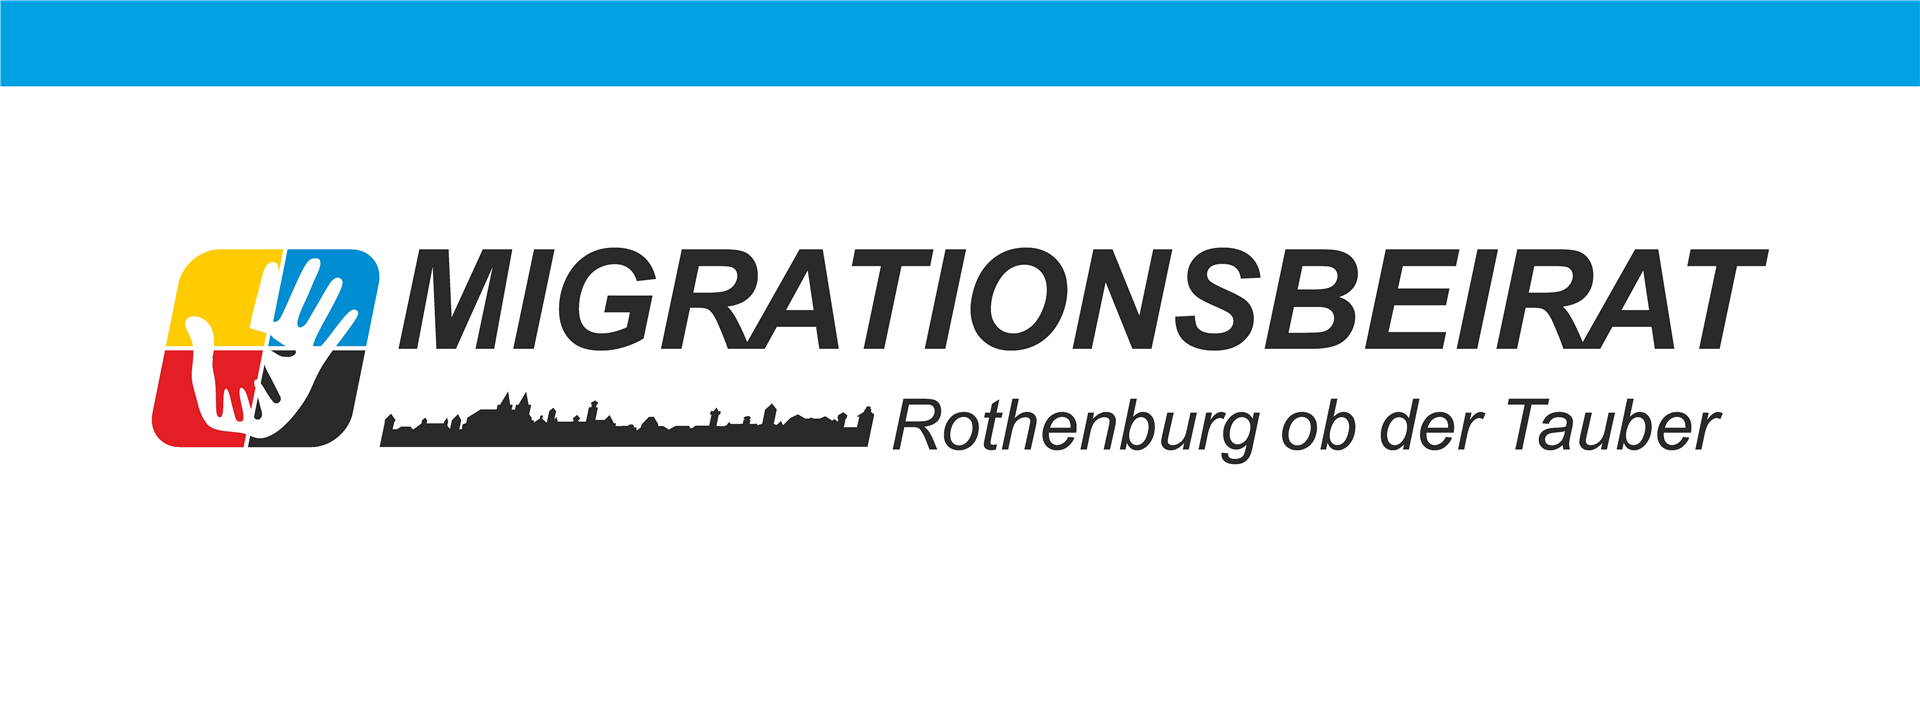 Orte | Migrationsbeirat Rothenburg ob der Tauber